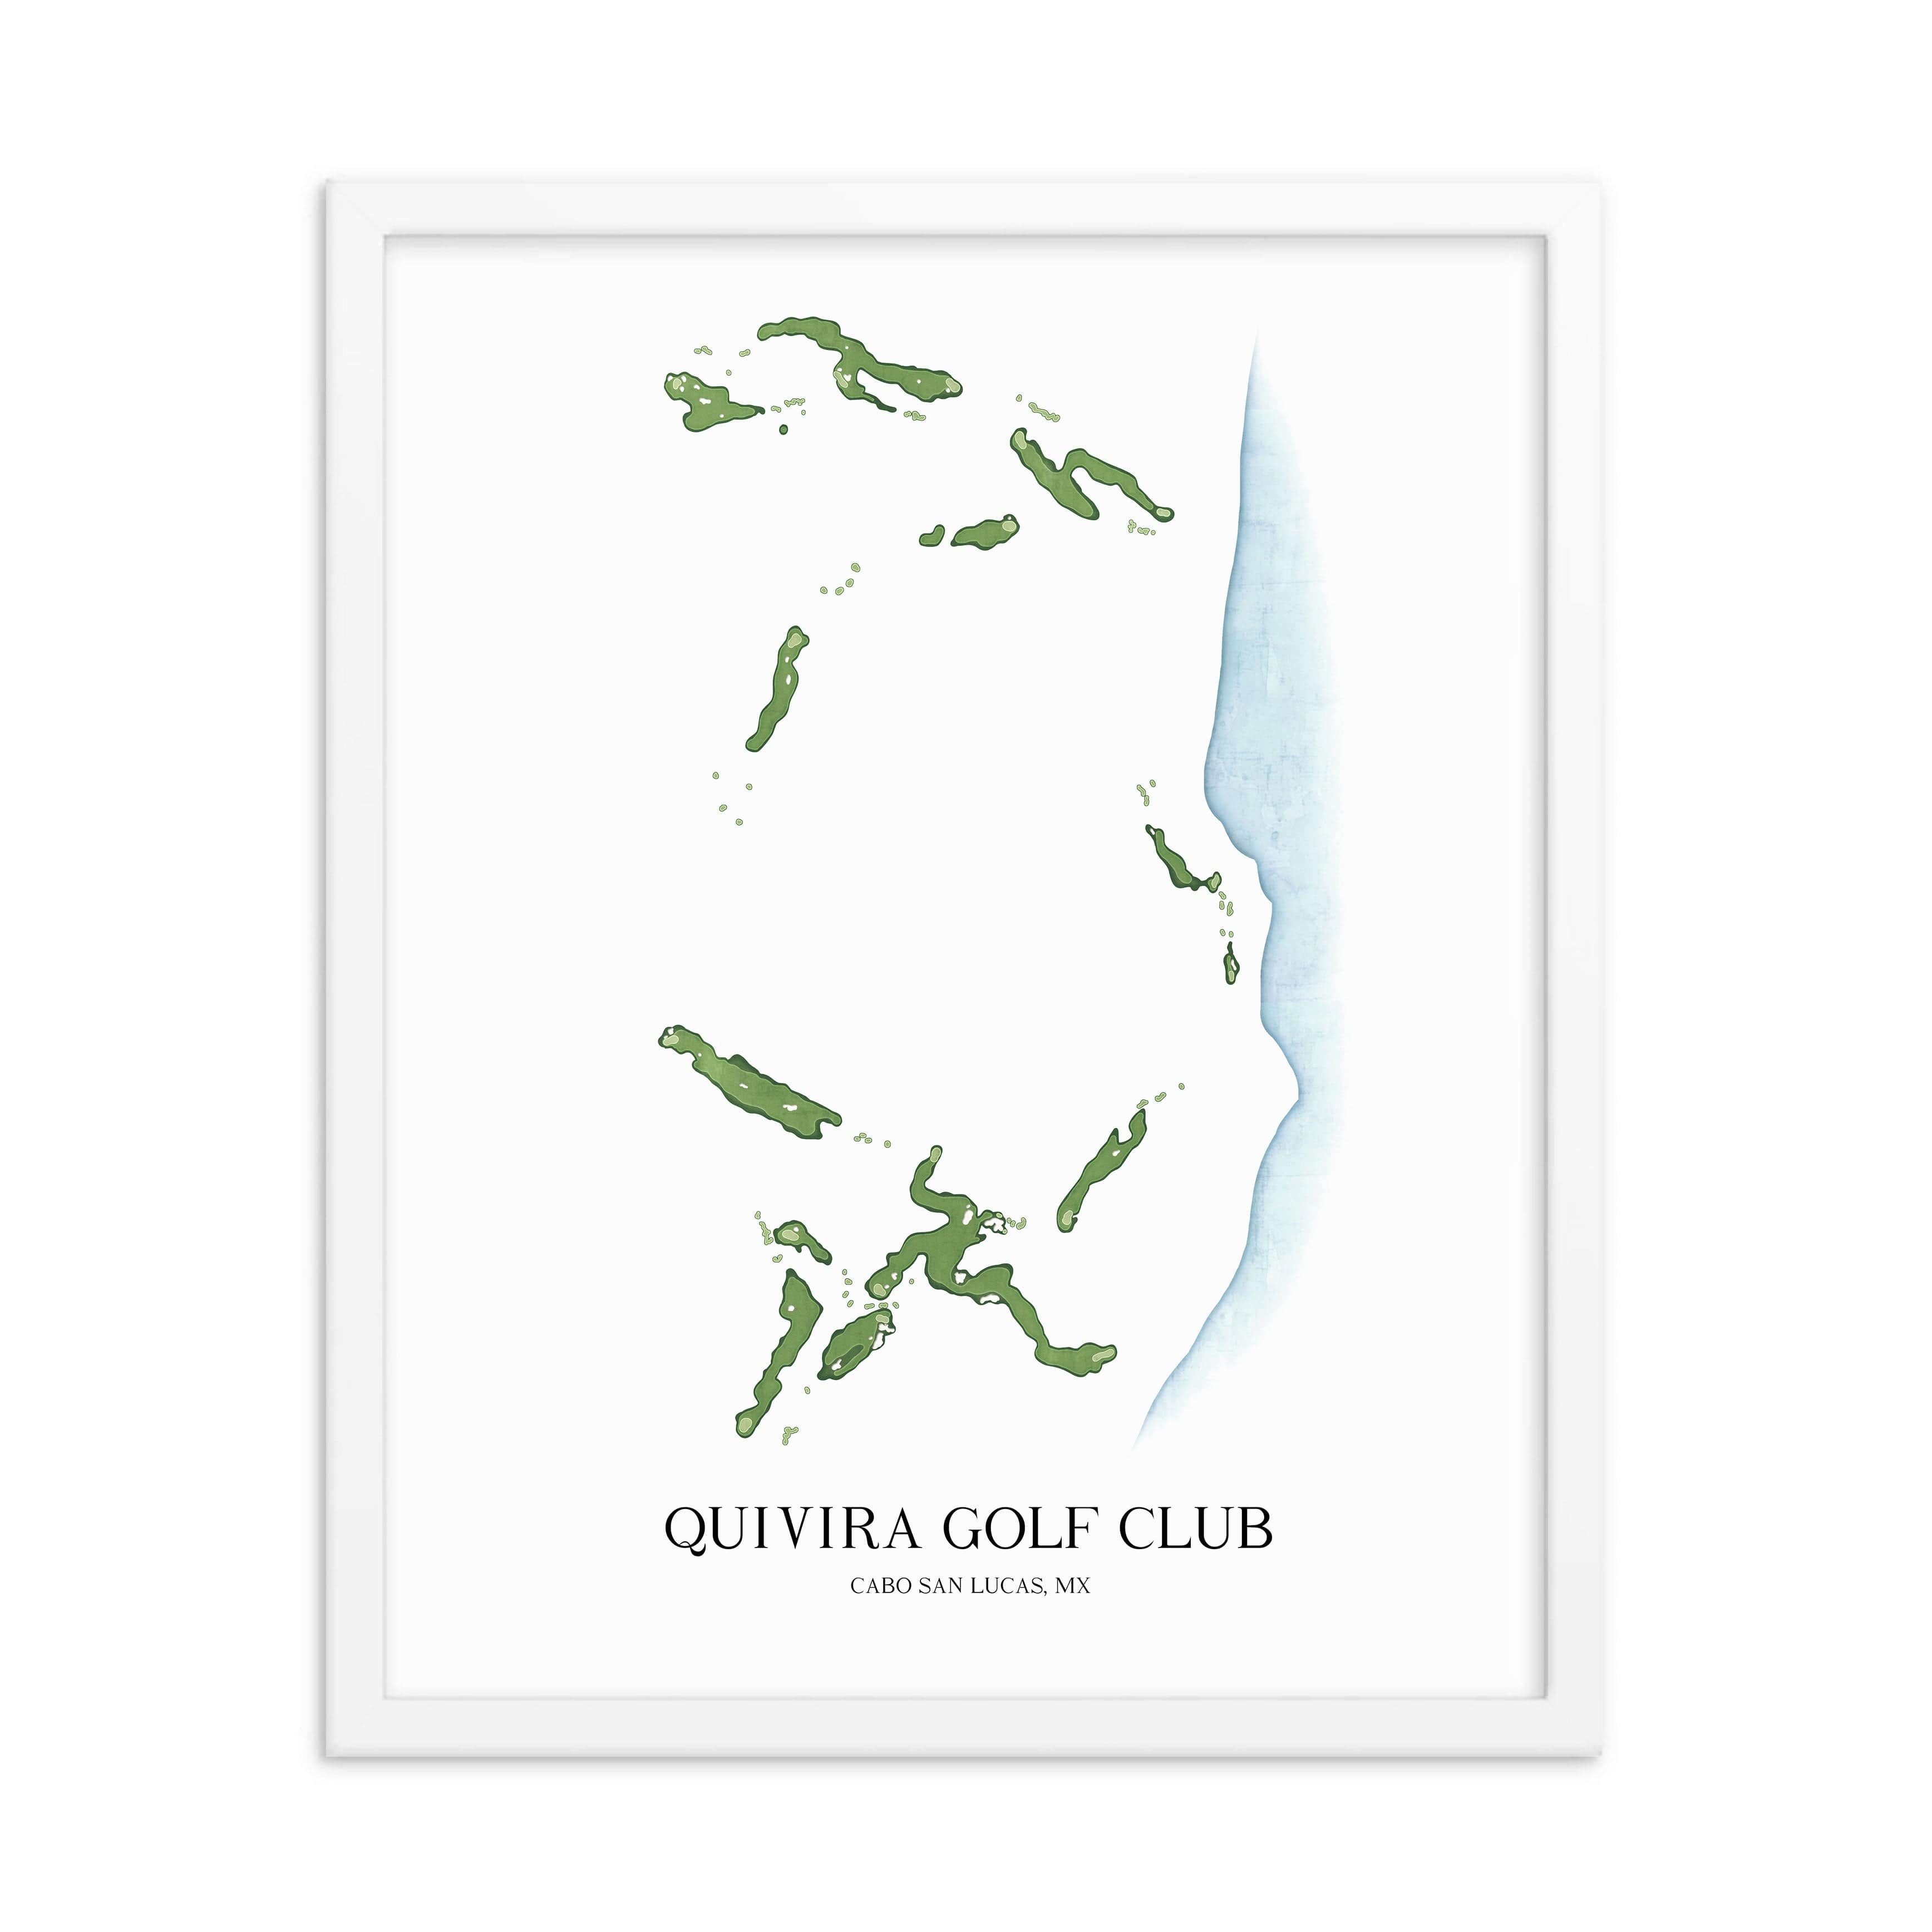 The 19th Hole Golf Shop - Golf Course Prints -  Quivira Golf Club - Cabo San Lucas Golf Course Map